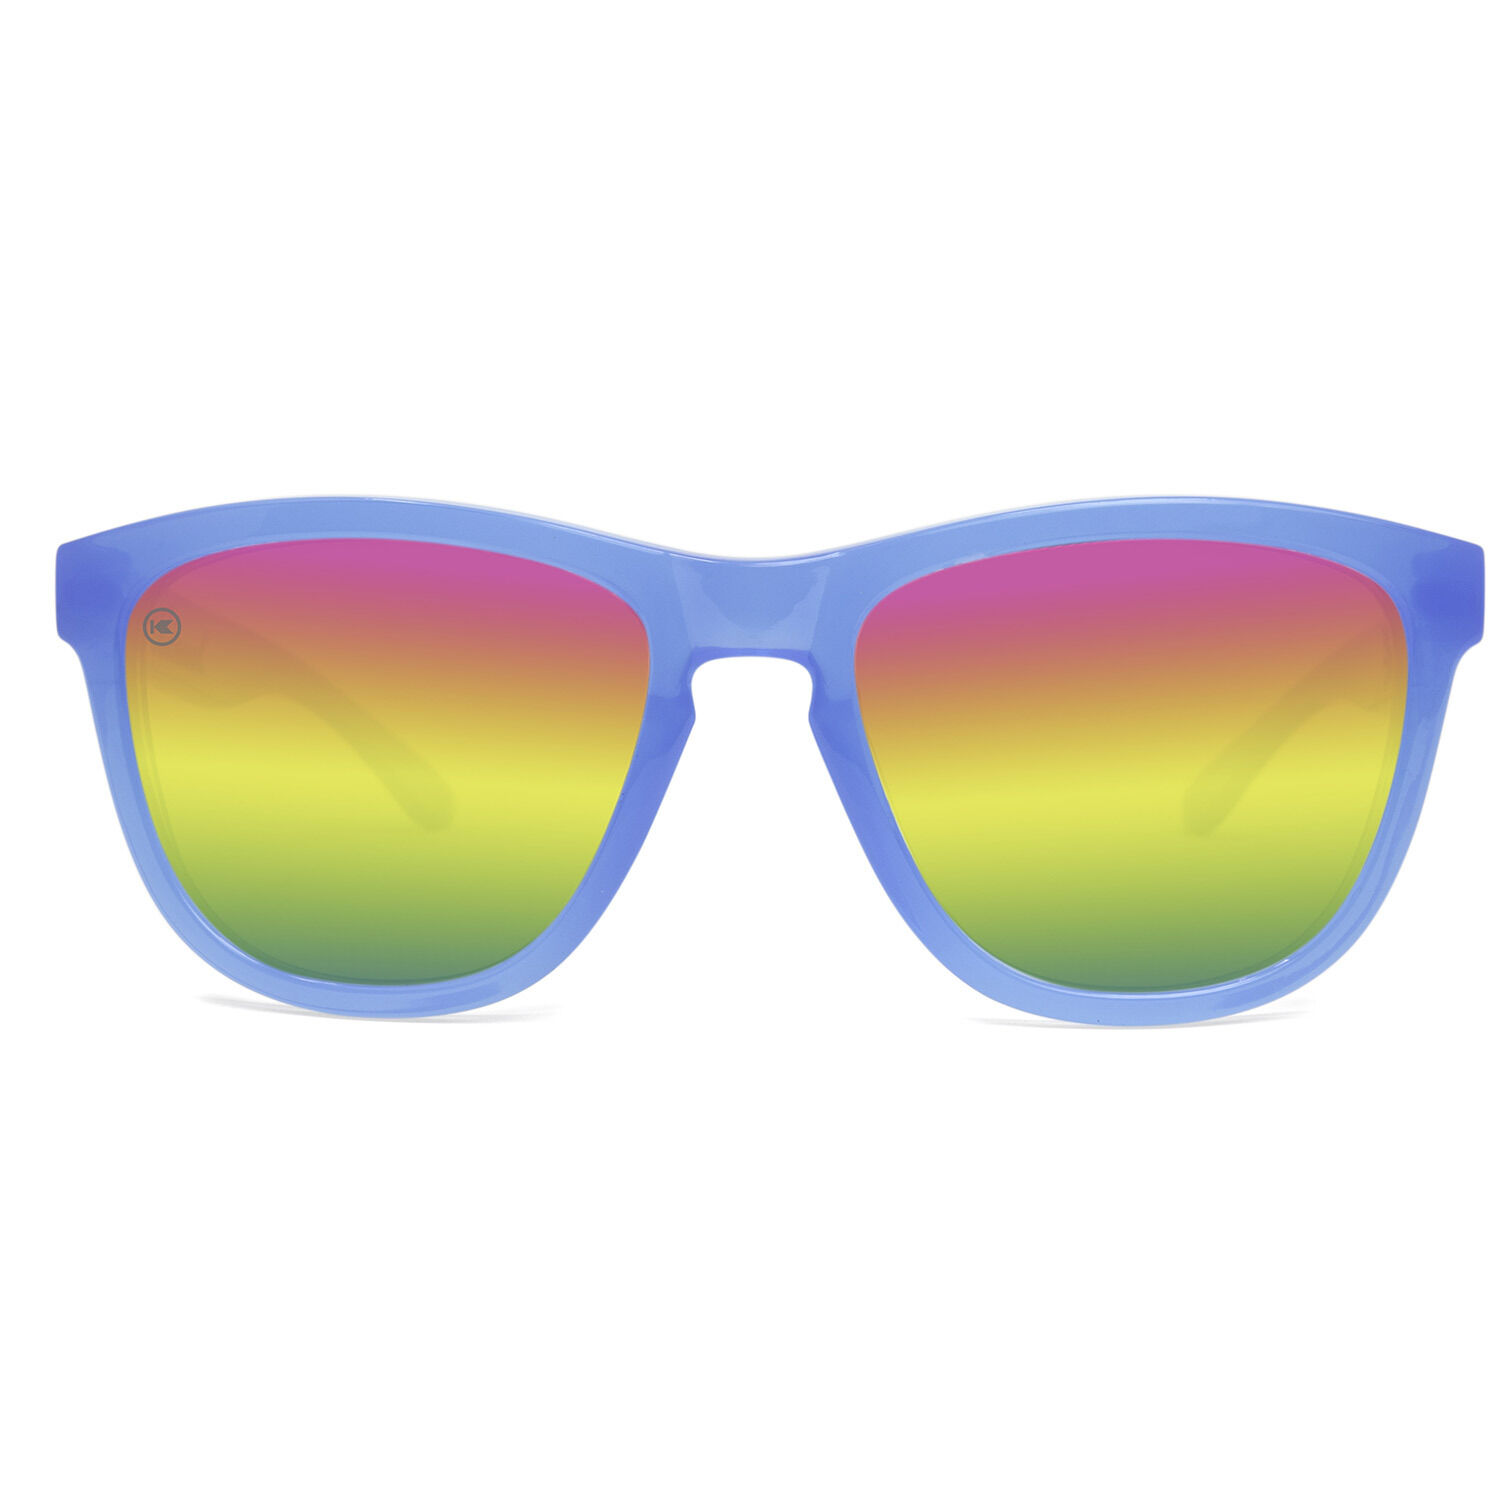 Pit Viper 1993 2000 Polarized Sunglasses - Rainbow Mirror – Route One